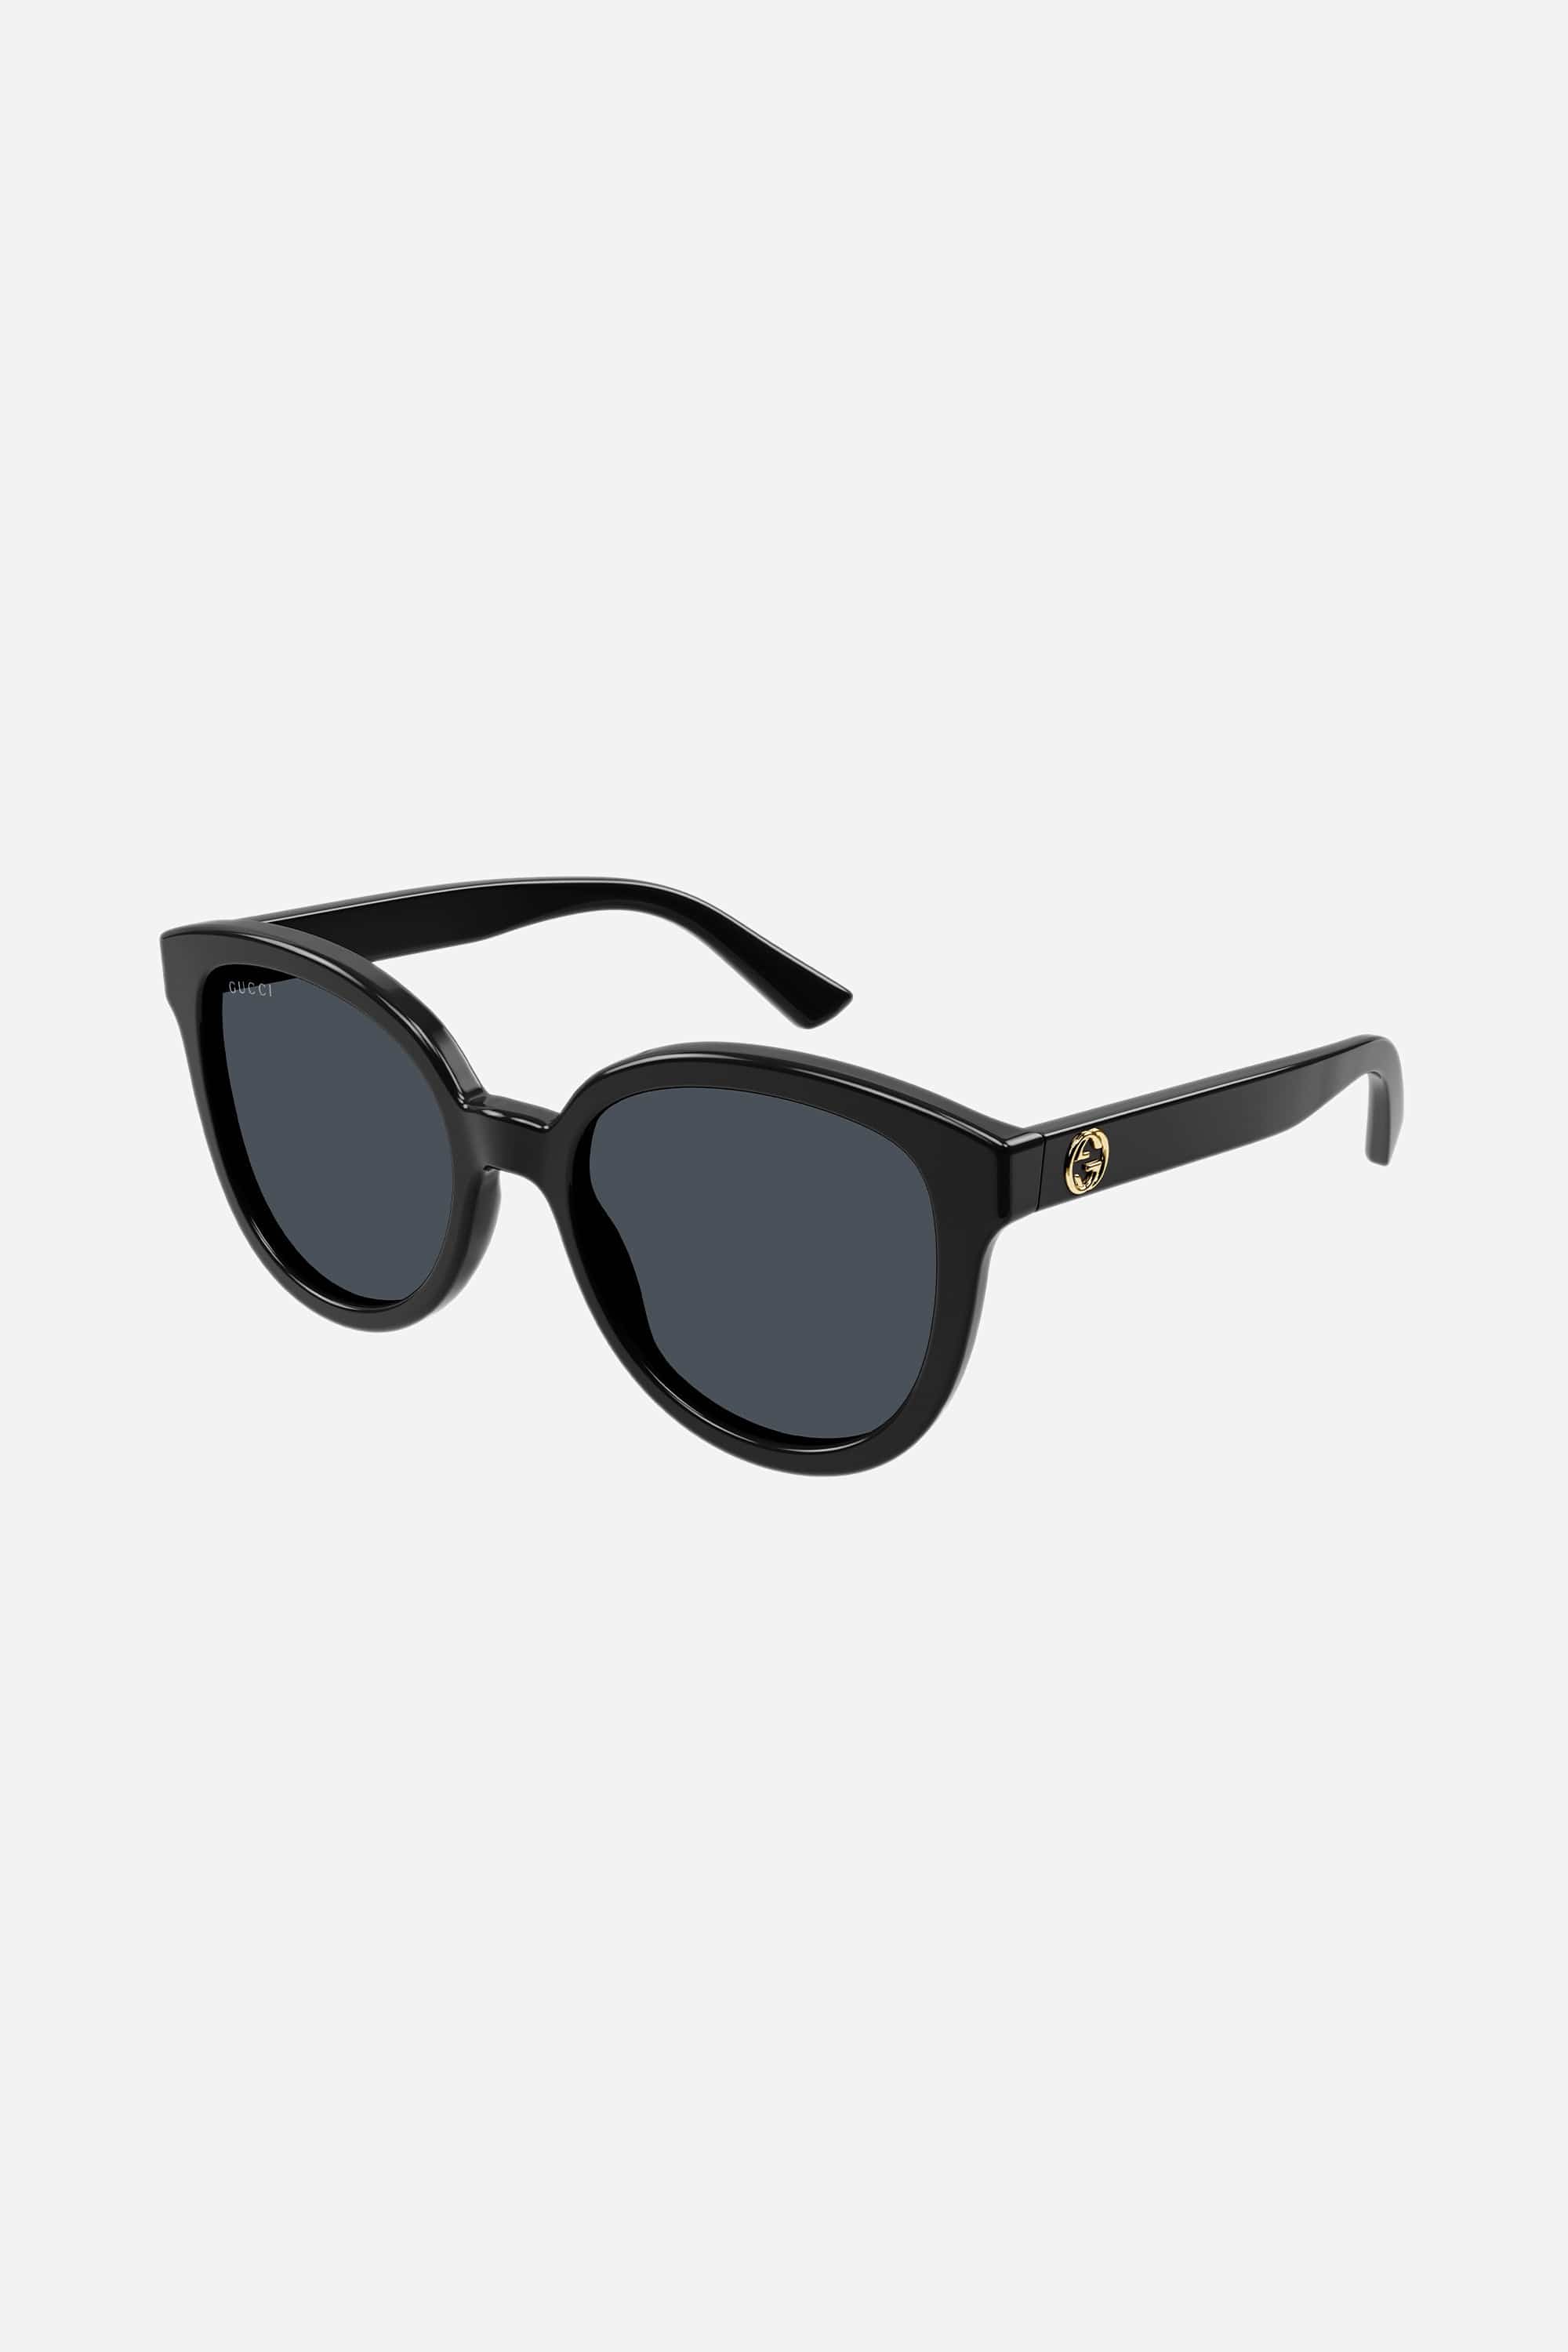 Gucci oversize cat eye round black sunglasses - Eyewear Club